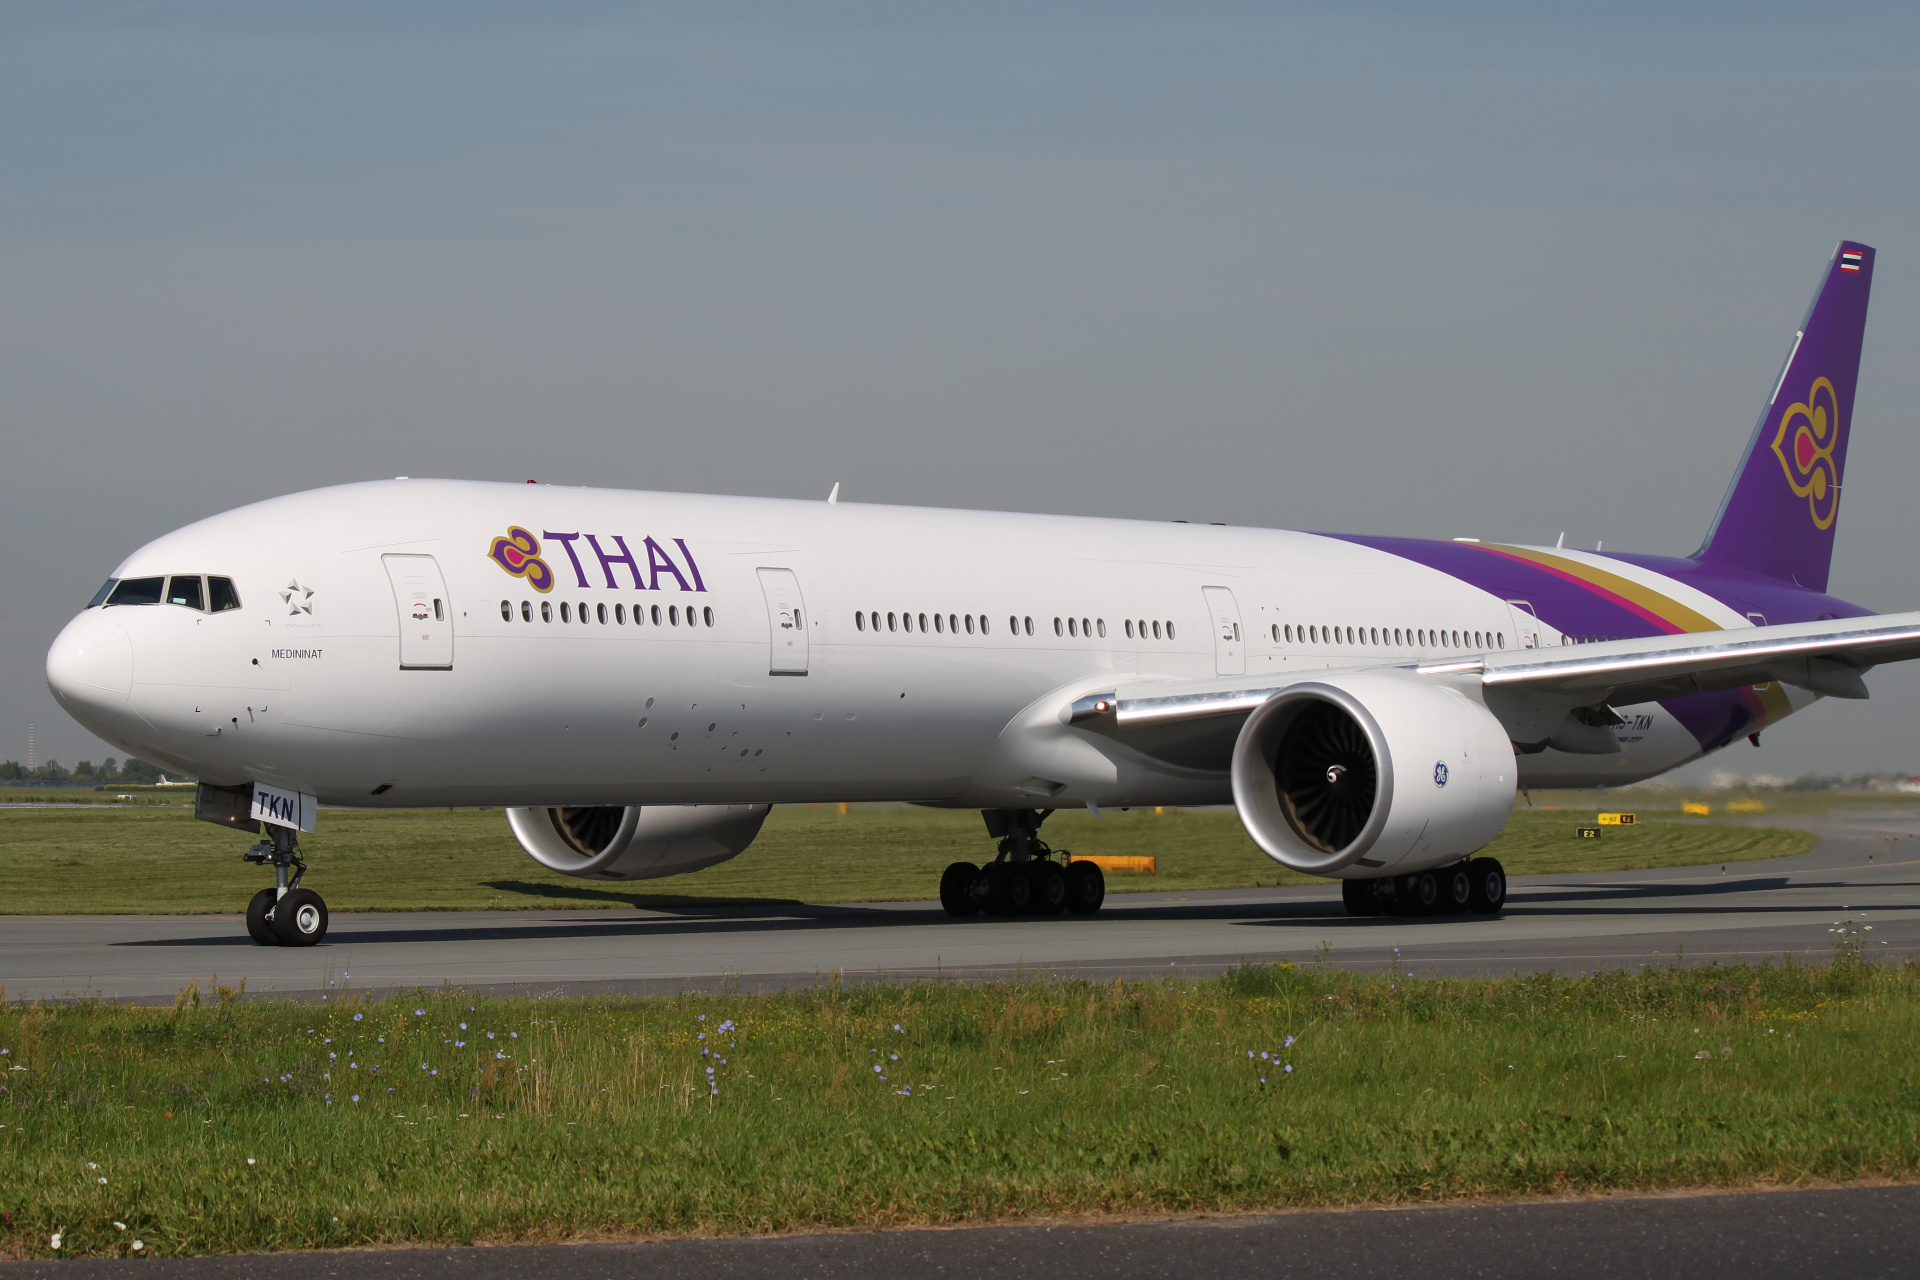 HS-TKN (Aircraft » EPWA Spotting » Boeing 777-300ER » Thai Airlines)